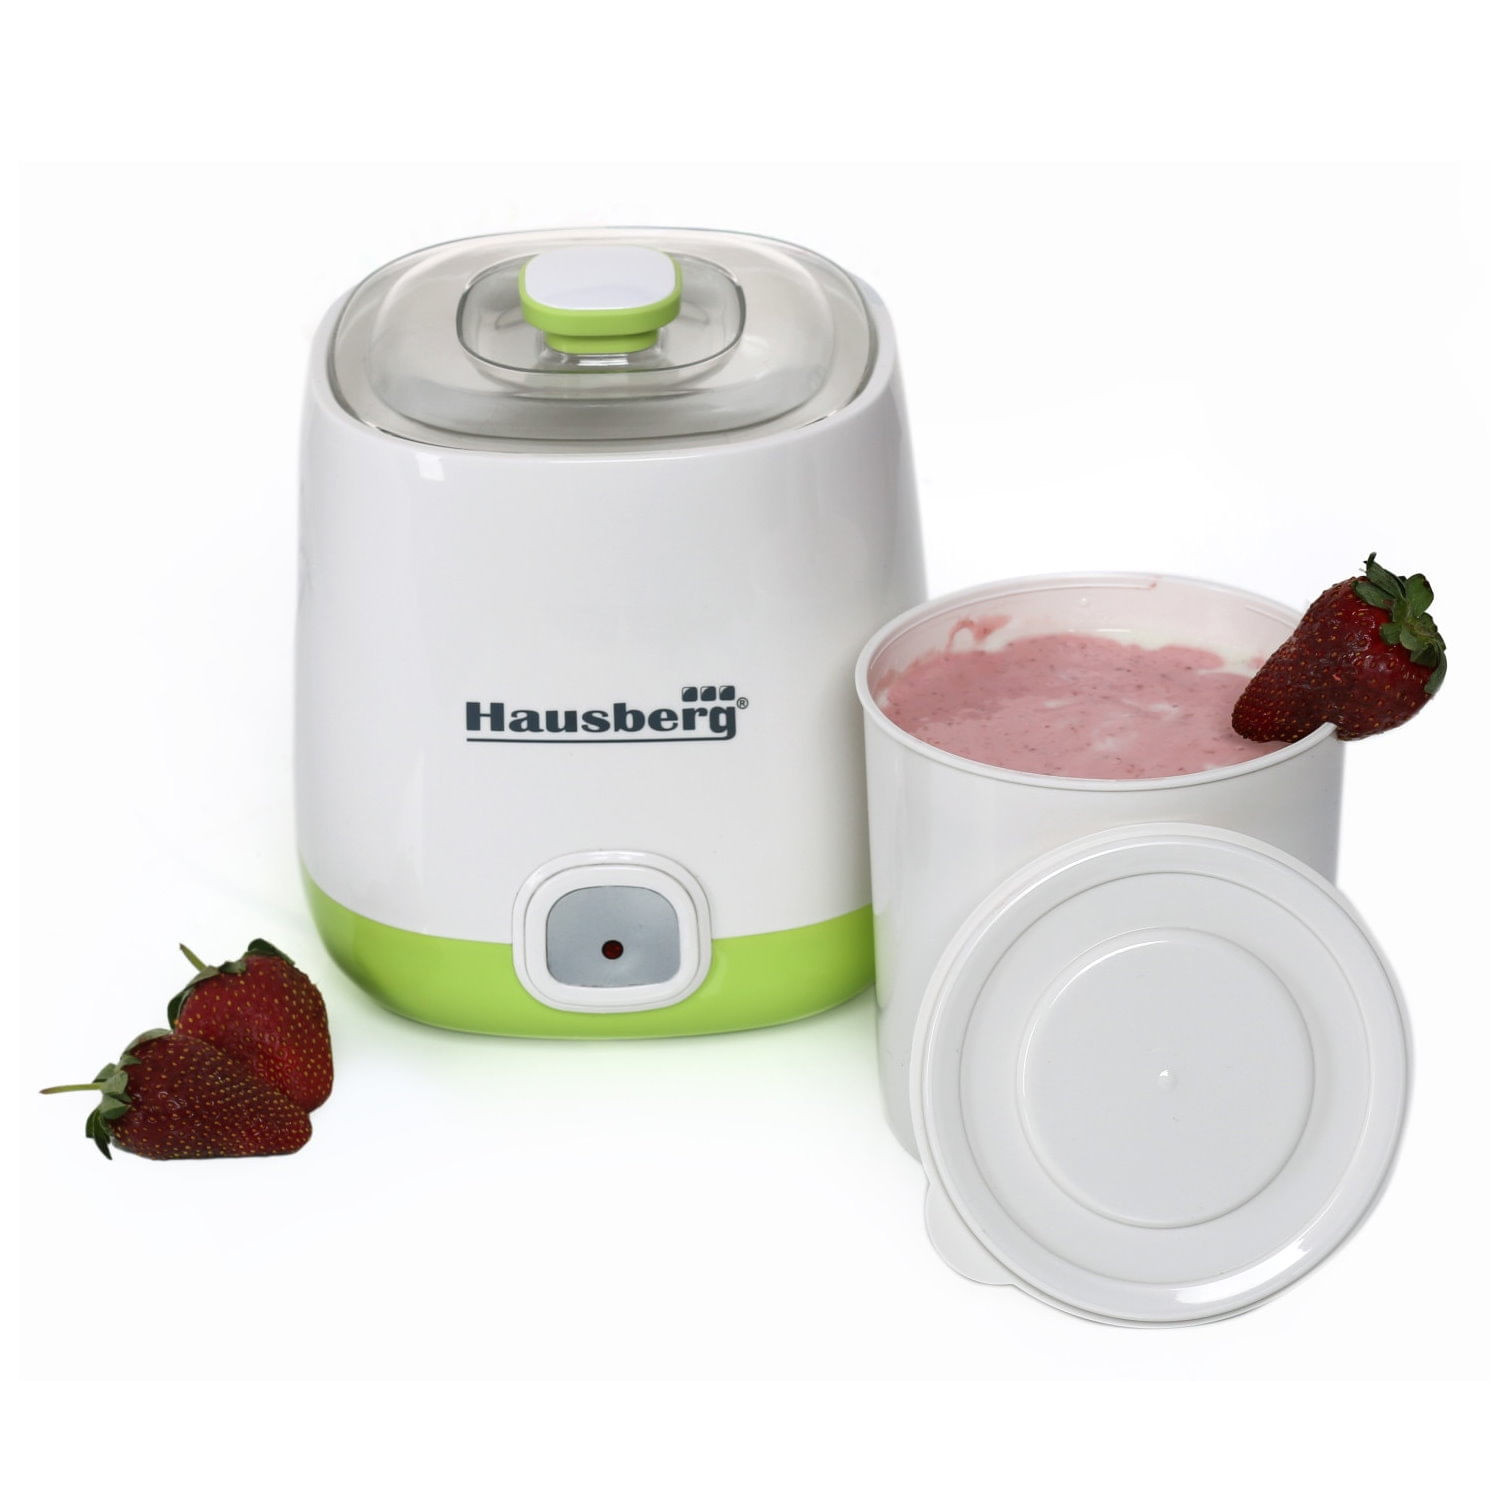 Aparat de iaurt Hausberg HB-2190, 20W, 1 litru, Fara borcane, Termostat, Alb/verde